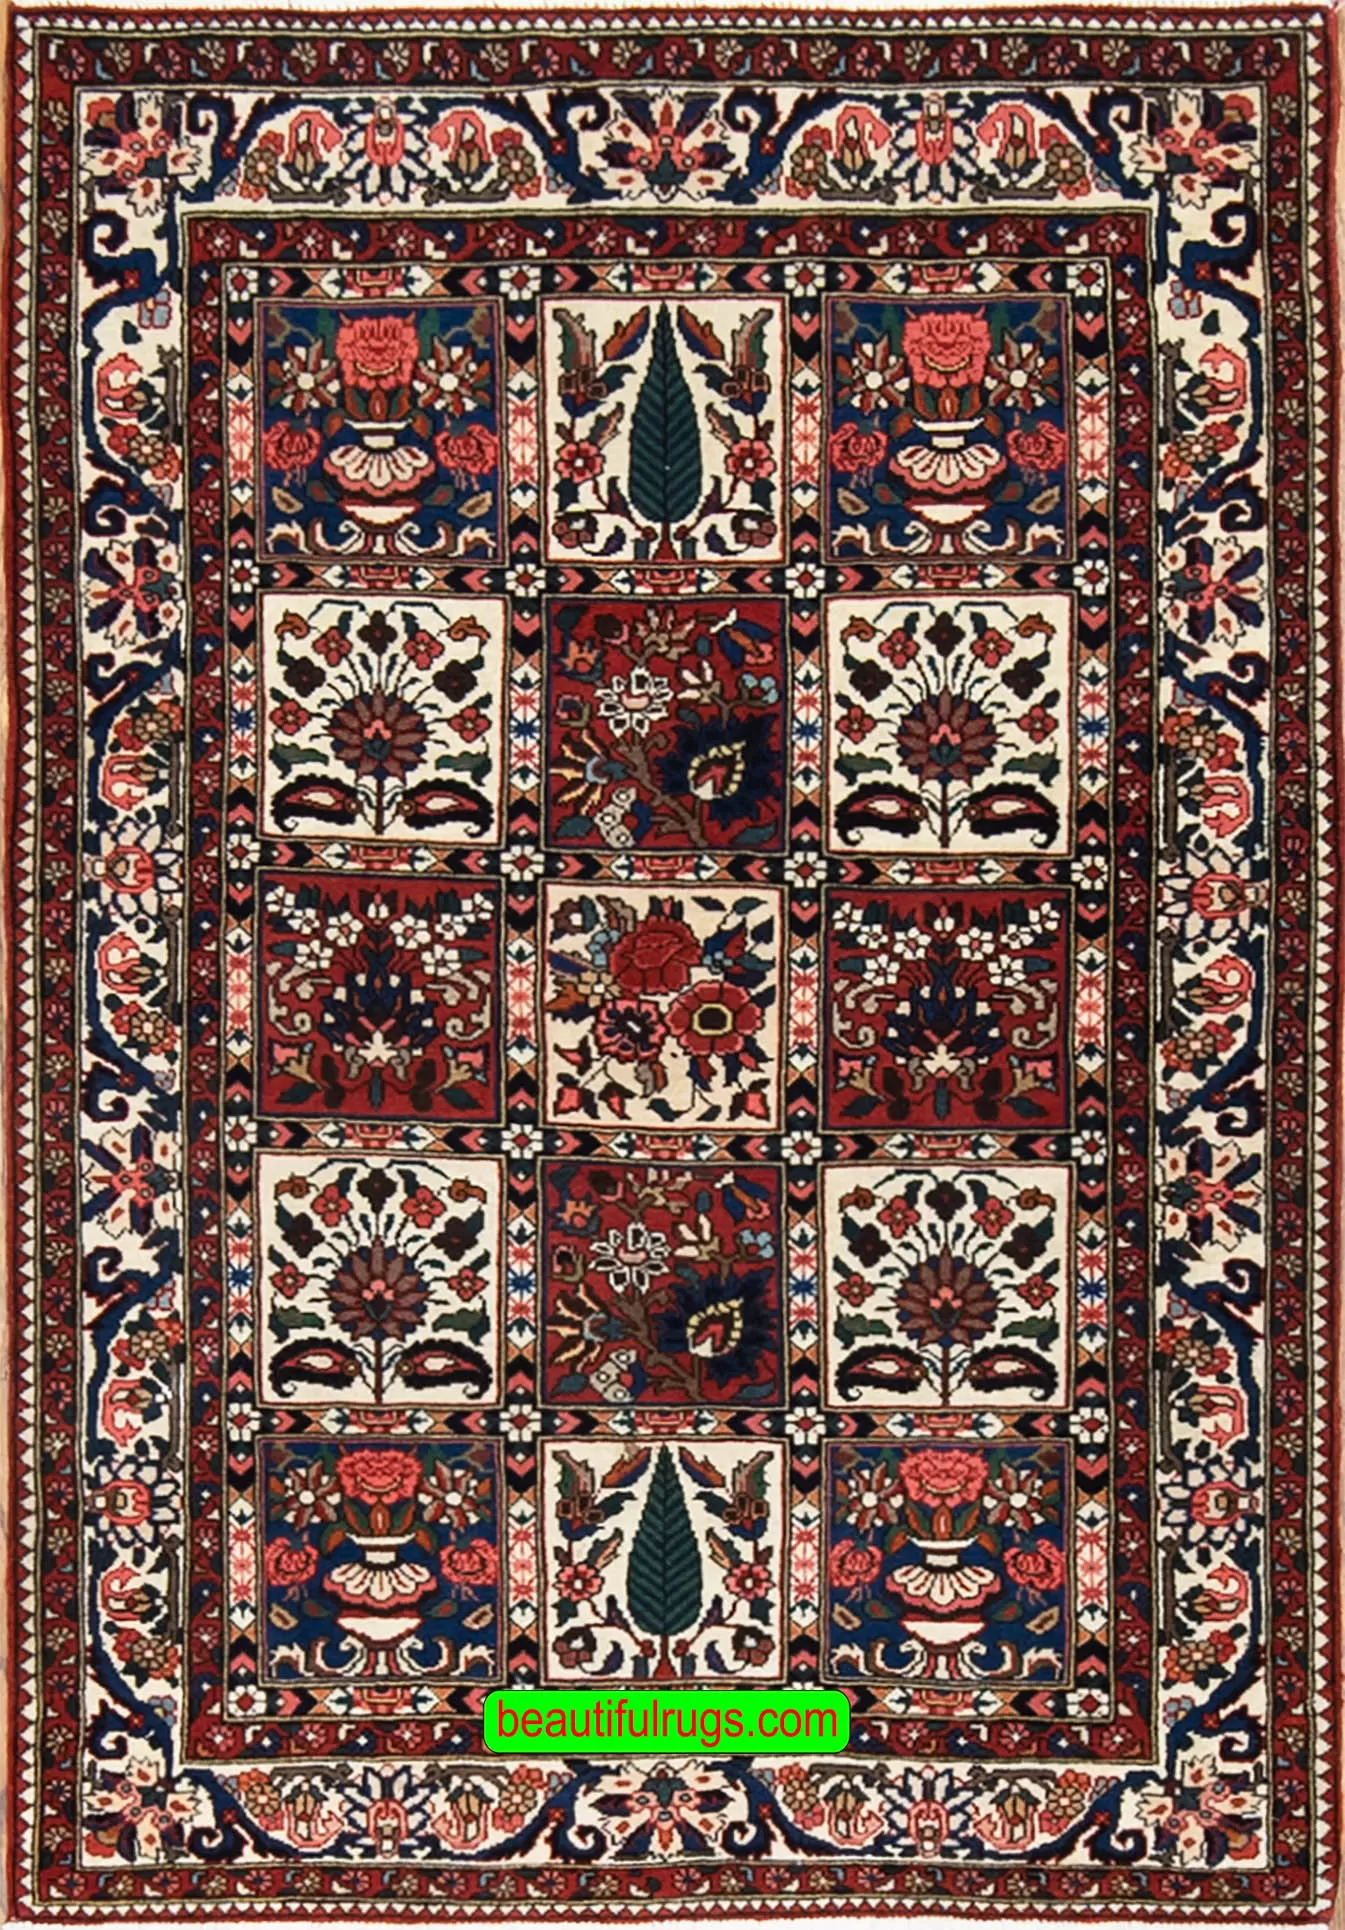 Traditional area rug, handmade multicolor Persian Bakhtiari wool area rug, four seasons design. size 3.5x5.